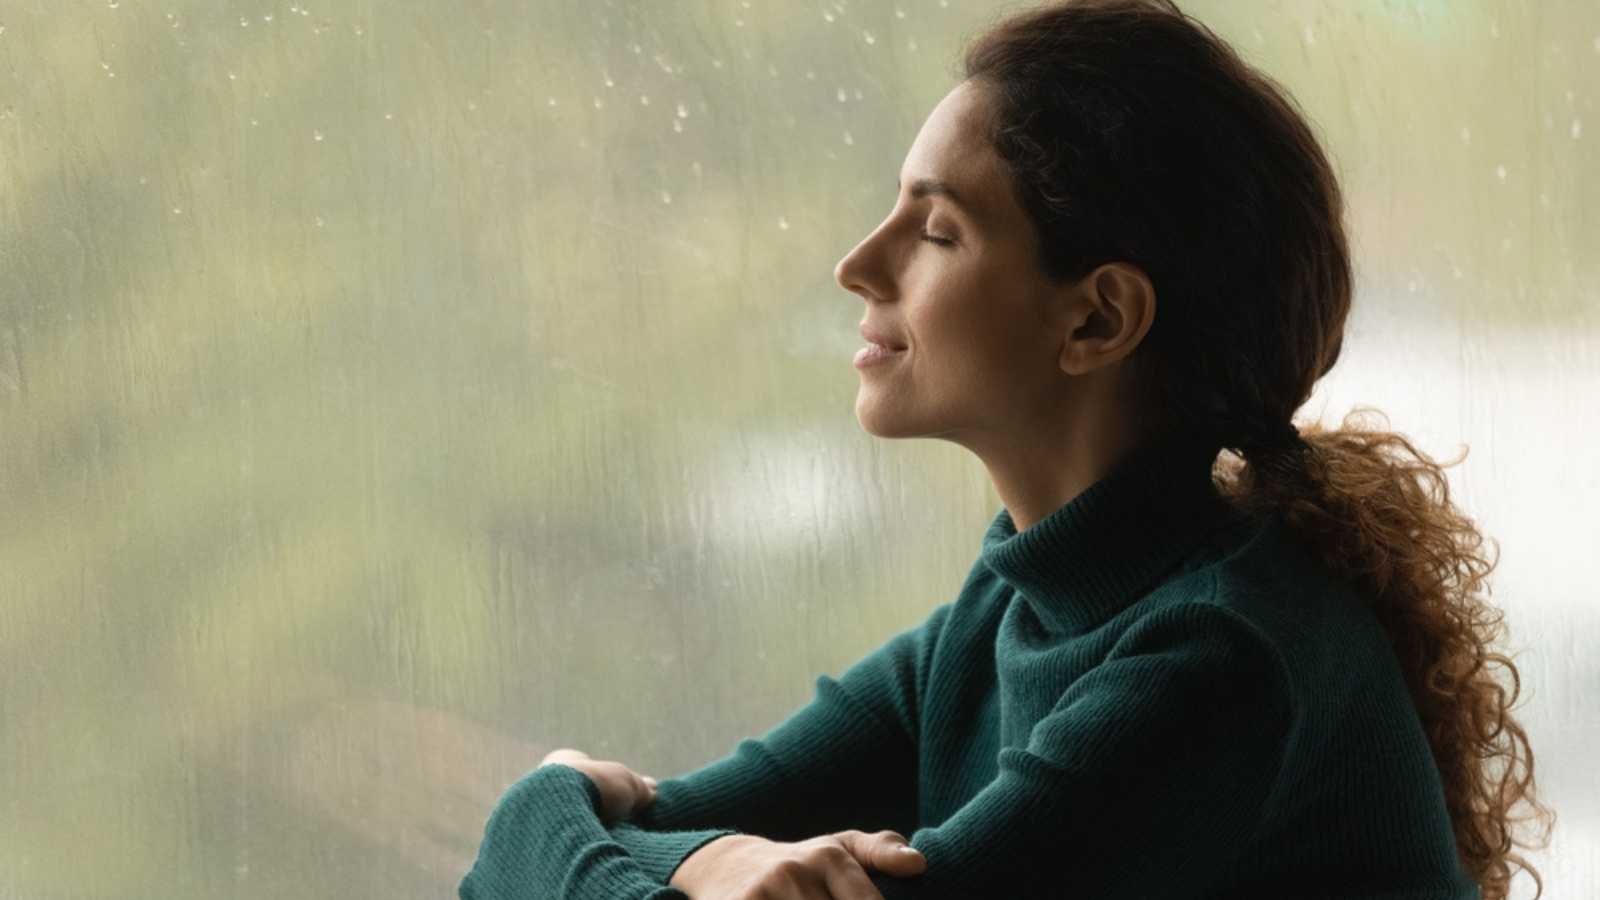 Woman calmly enjoying rain